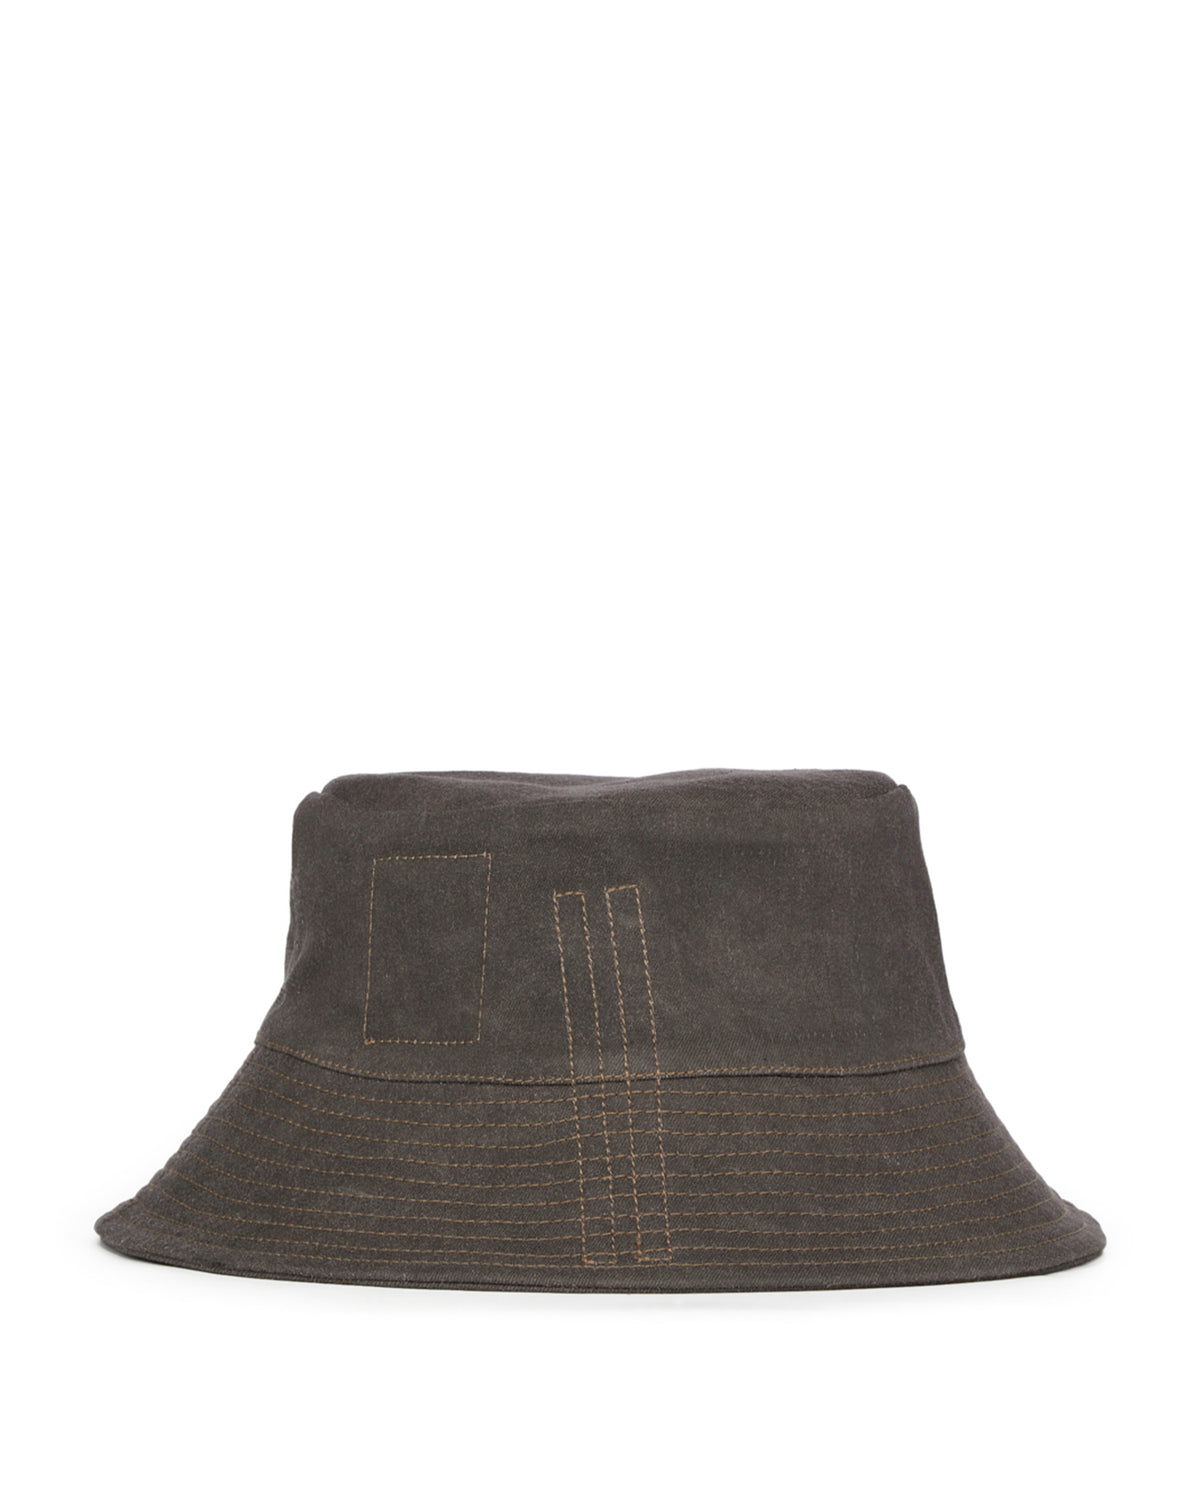 Gilligan Hat Narrow Brim - Dark Dust